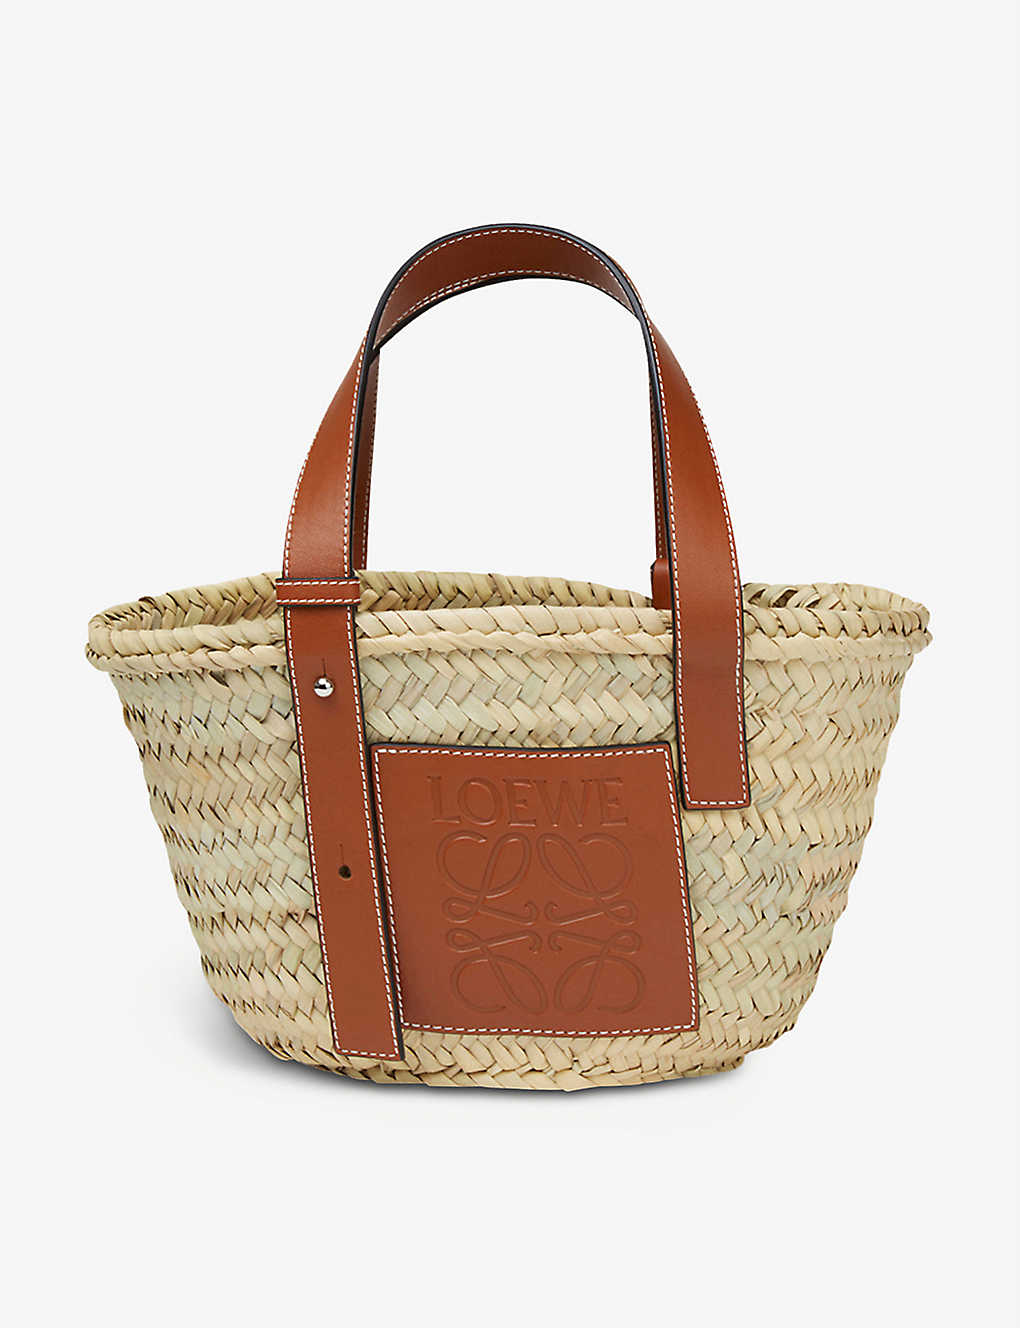 Woven raffia small basket bag